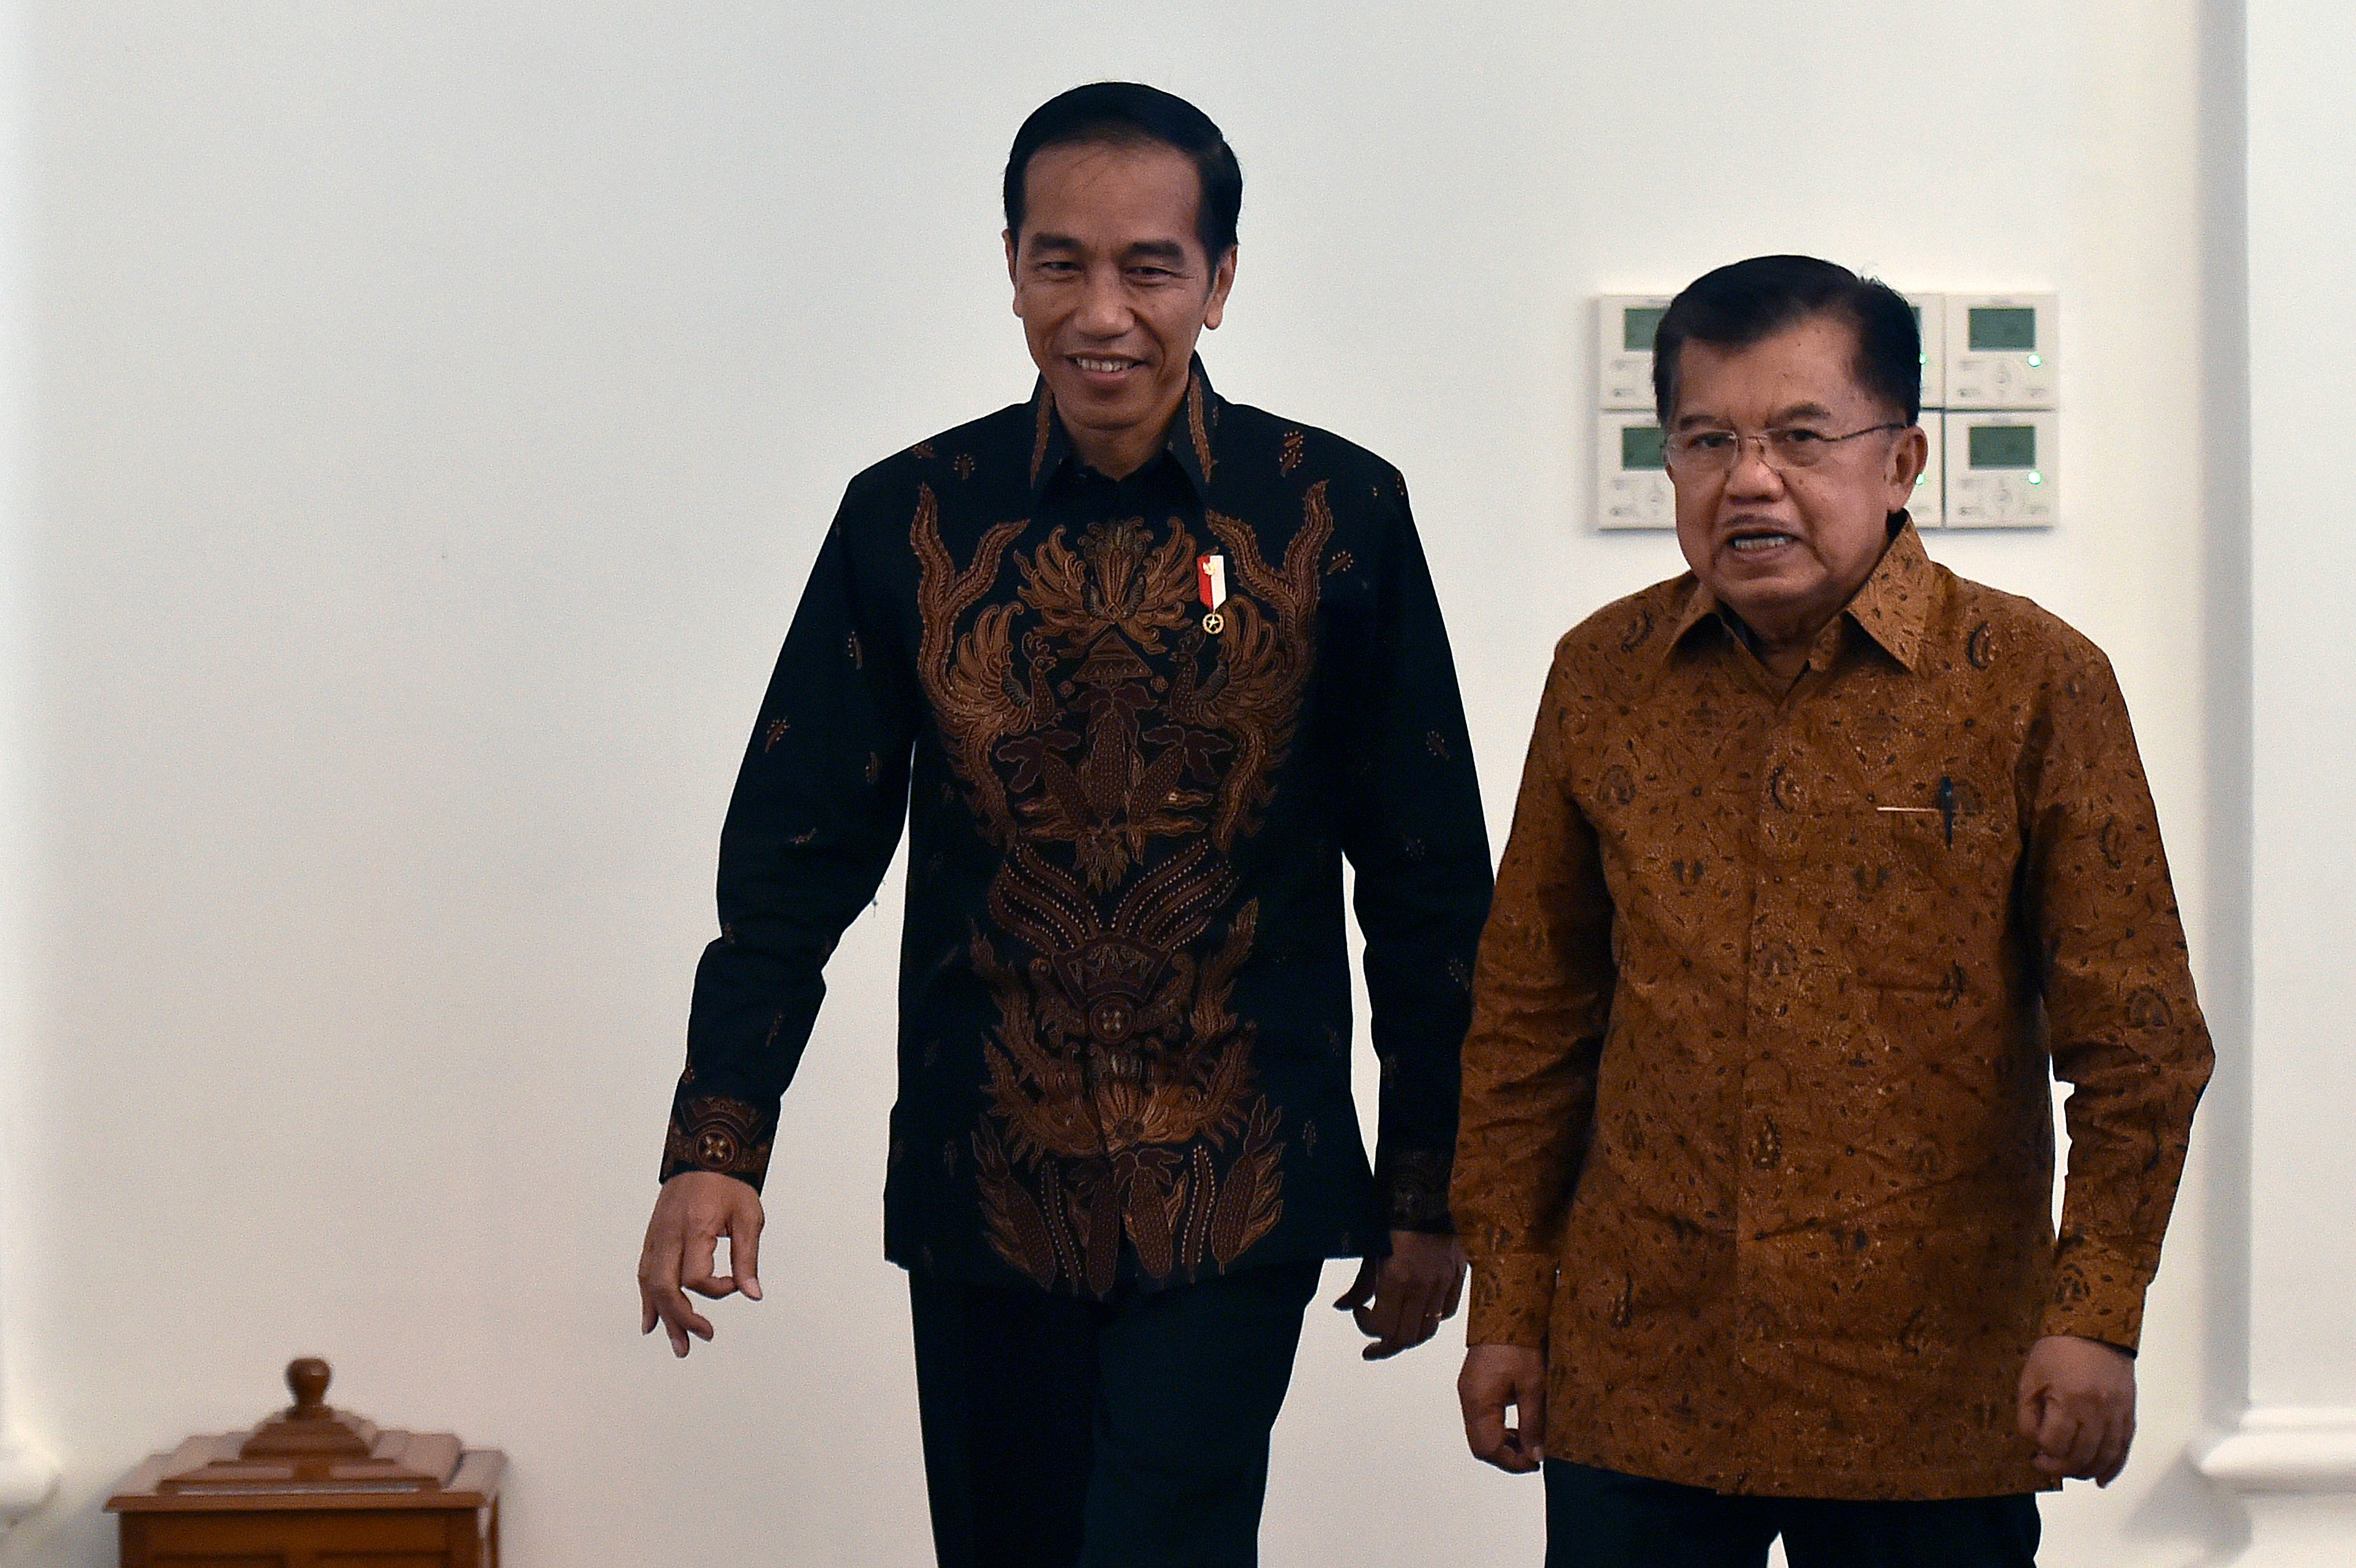 LAPORAN PEMERIKSAAN. Presiden Joko Widodo (kiri) didampingi Wakil Presiden Jusuf Kalla (kanan) meninggalkan Ruang Garuda seusai menghadiri Penyampaian Laporan Hasil Pemeriksaan atas Laporan Keuangan Pemerintah Pusat (LKPP) tahun 2016 di Istana Bogor, Bogor, Jawa Barat, Selasa, 23 Mei. Foto oleh Puspa Perwitasari/ANTARA 